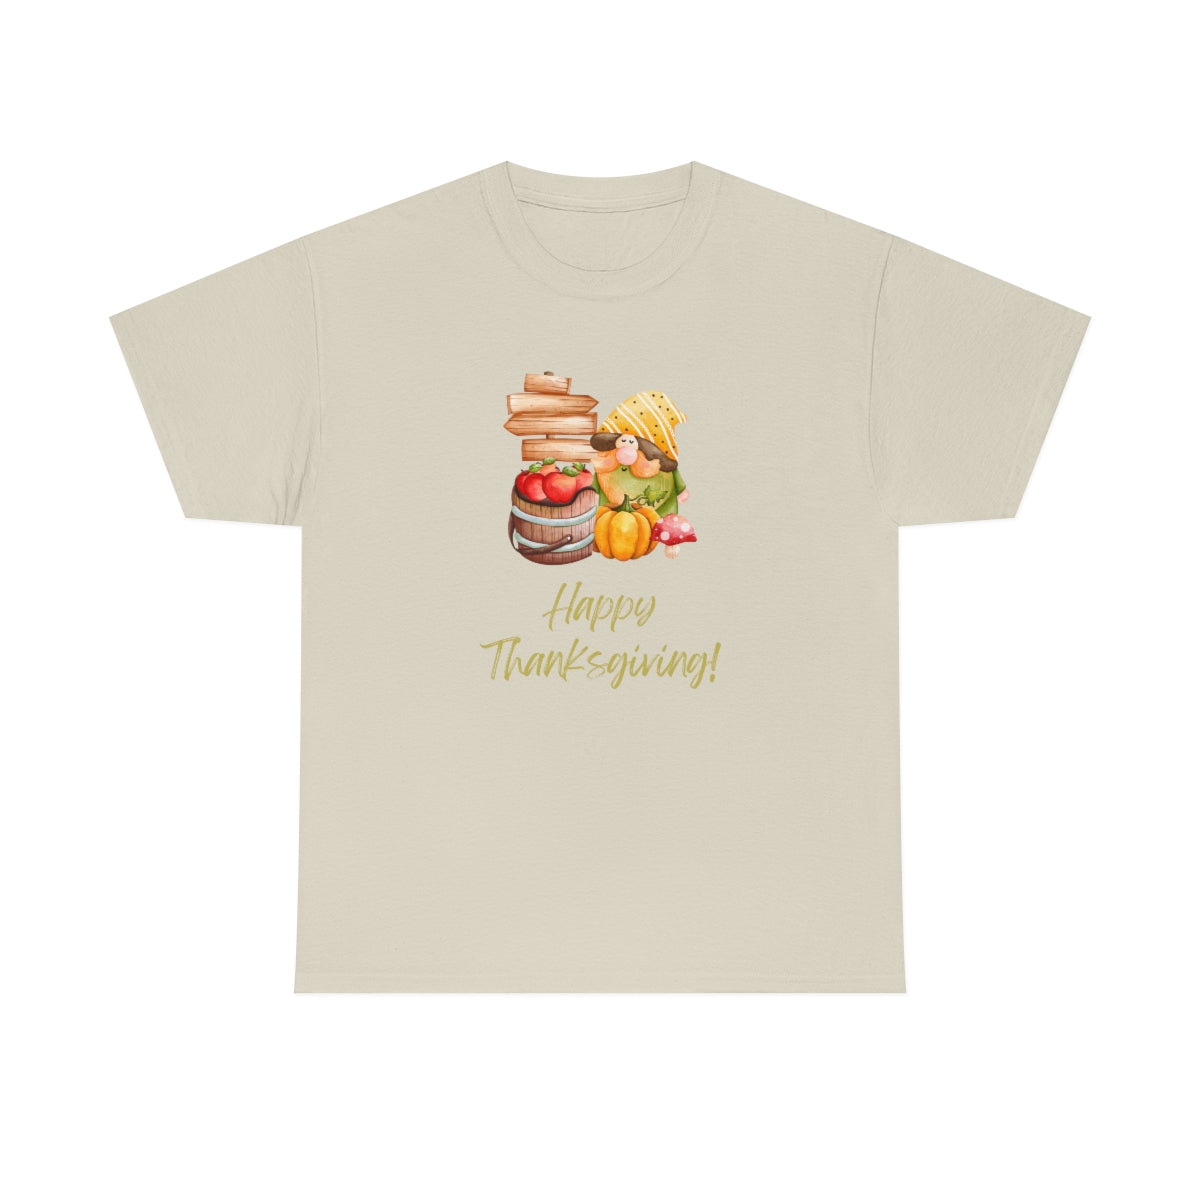 Thanksgiving Tshirt Gnome T-shirt Give Thanks Tee Gratitude Thankful Shirt Adult Fall Tees Autumn Apparel Cute Shirts Women Cute Fall Tee - The Good Life Vibe